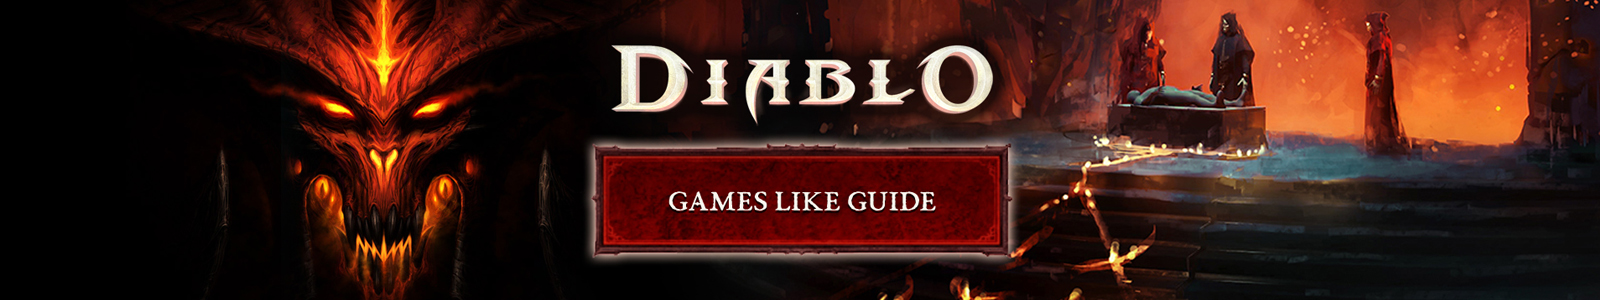 Diablo 4 Spiele wie Anleitung